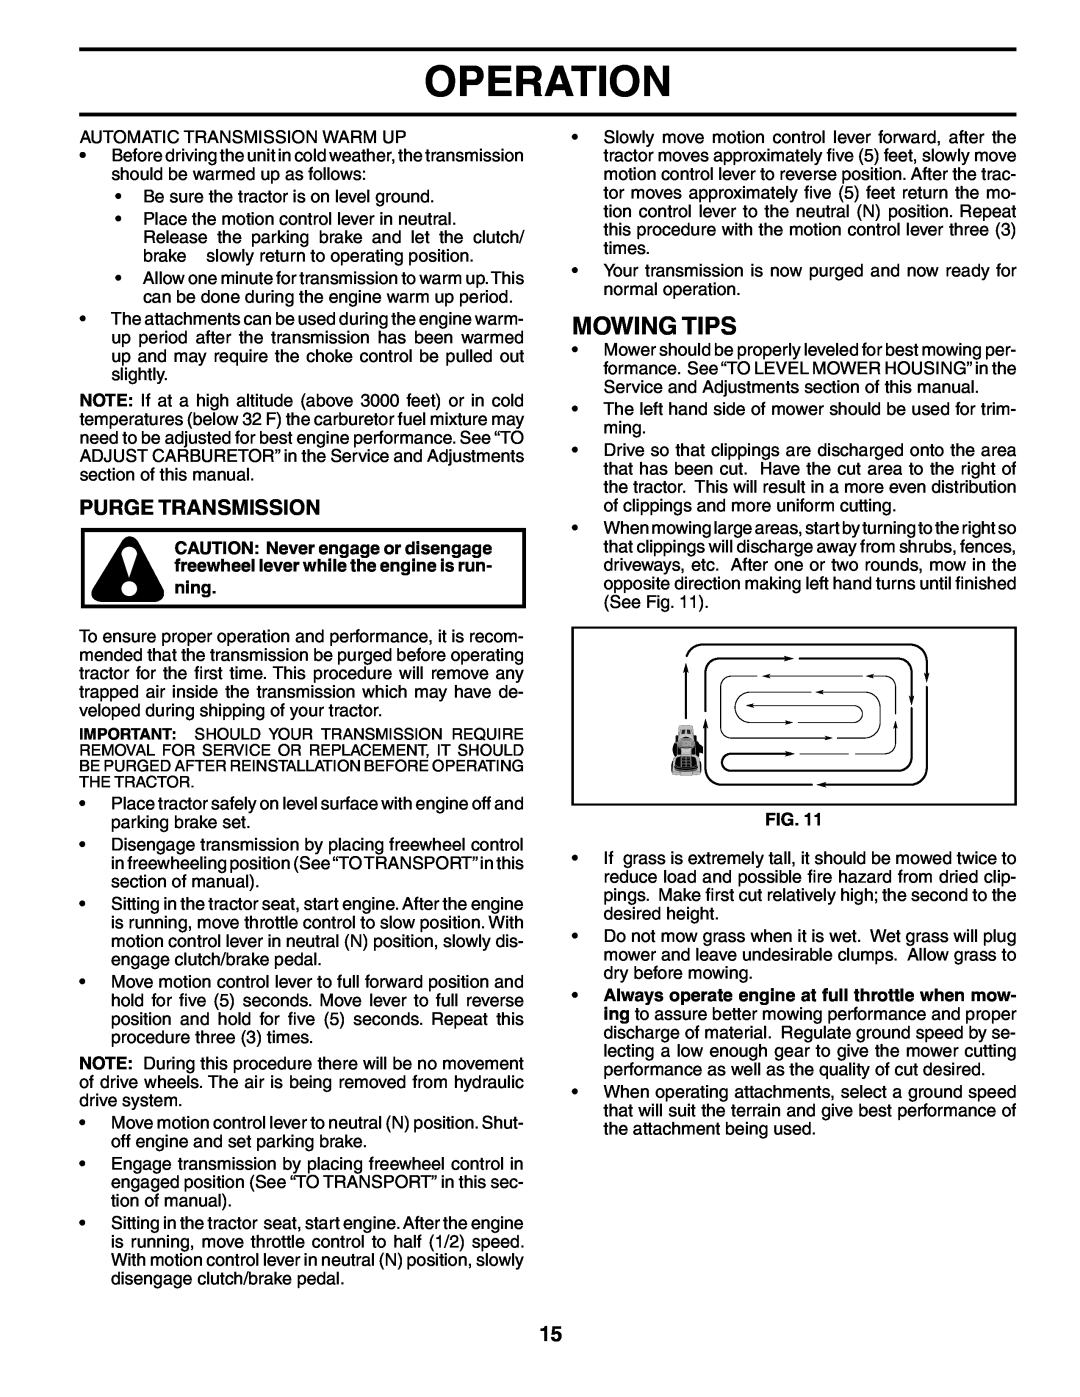 Poulan POGT20H48STA manual Mowing Tips, Purge Transmission, Operation 